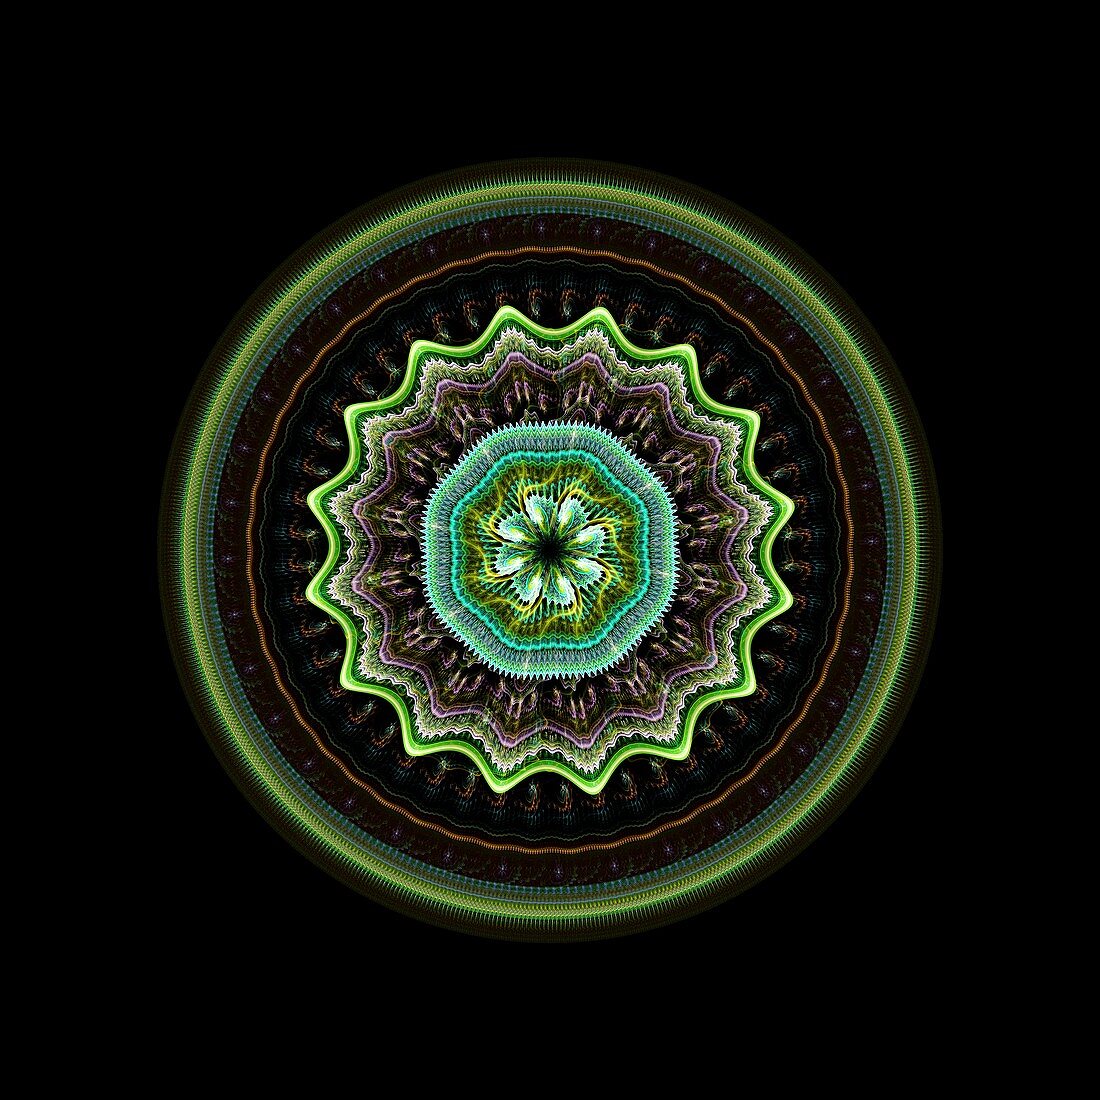 Mandala fractal illustration